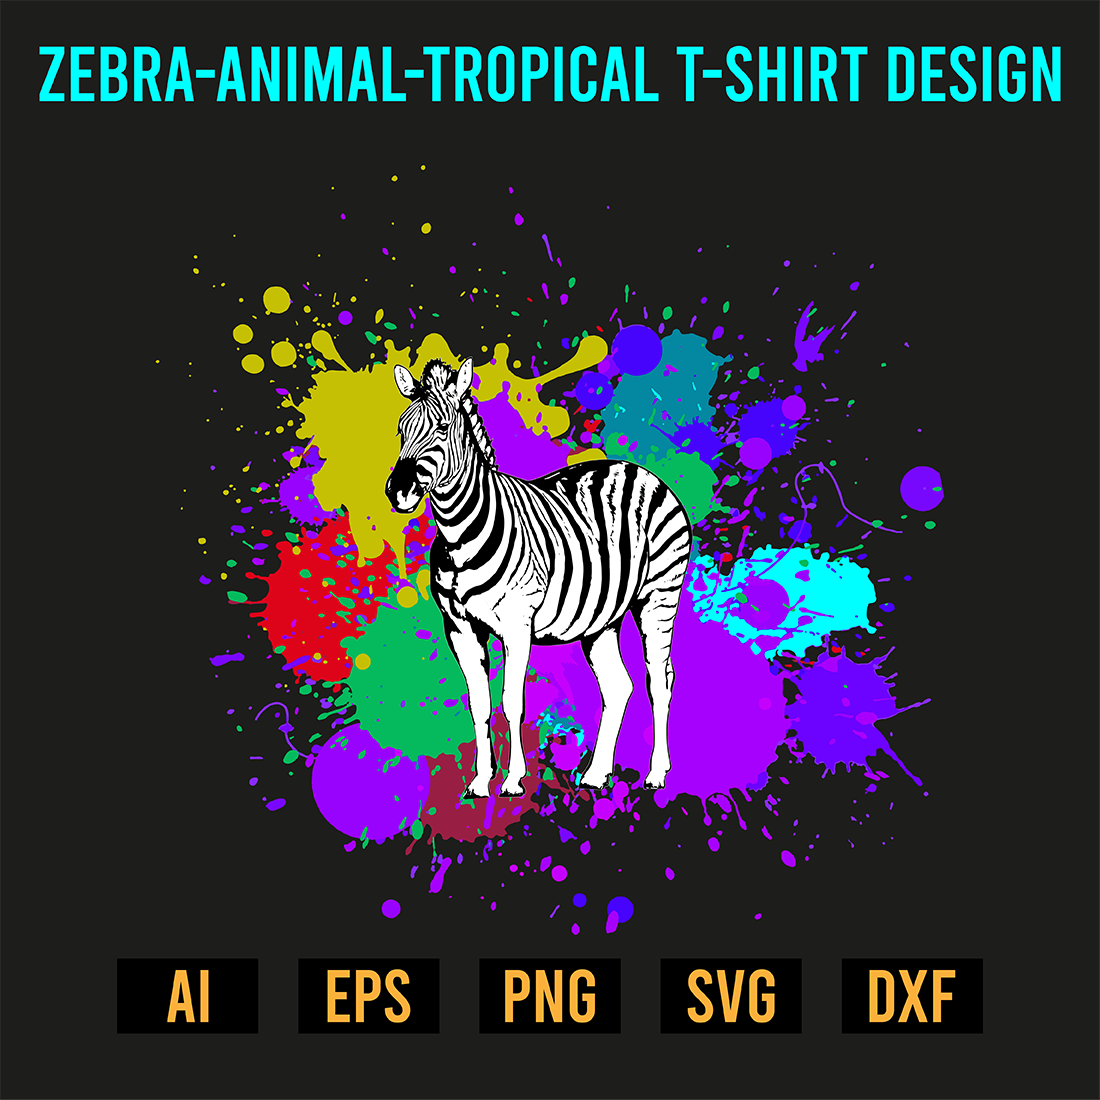 Zebra-animal-tropical T-Shirt Design preview image.